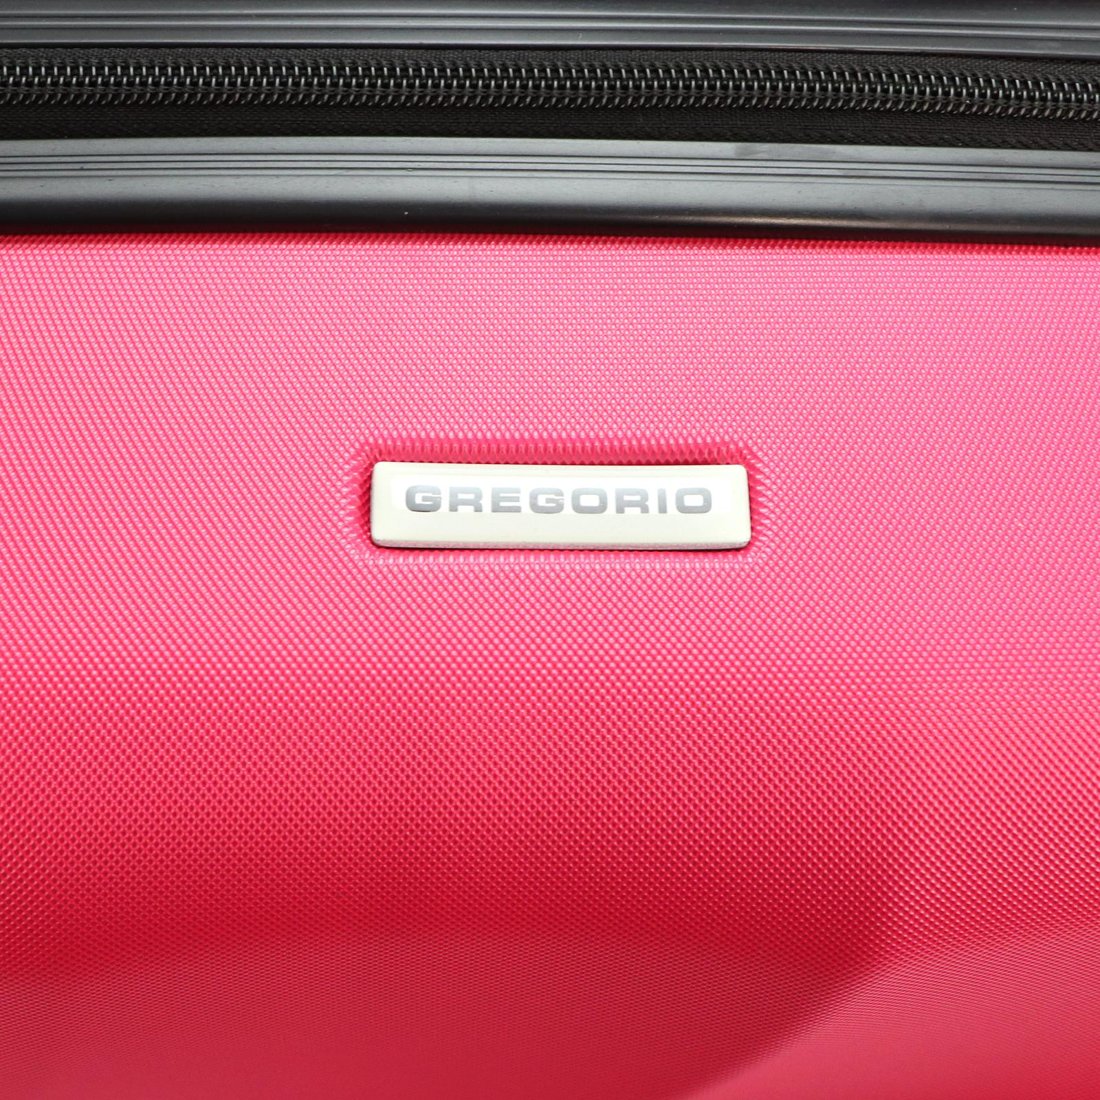 Sturdy ABS women's suitcase Gregorio W3002 S24